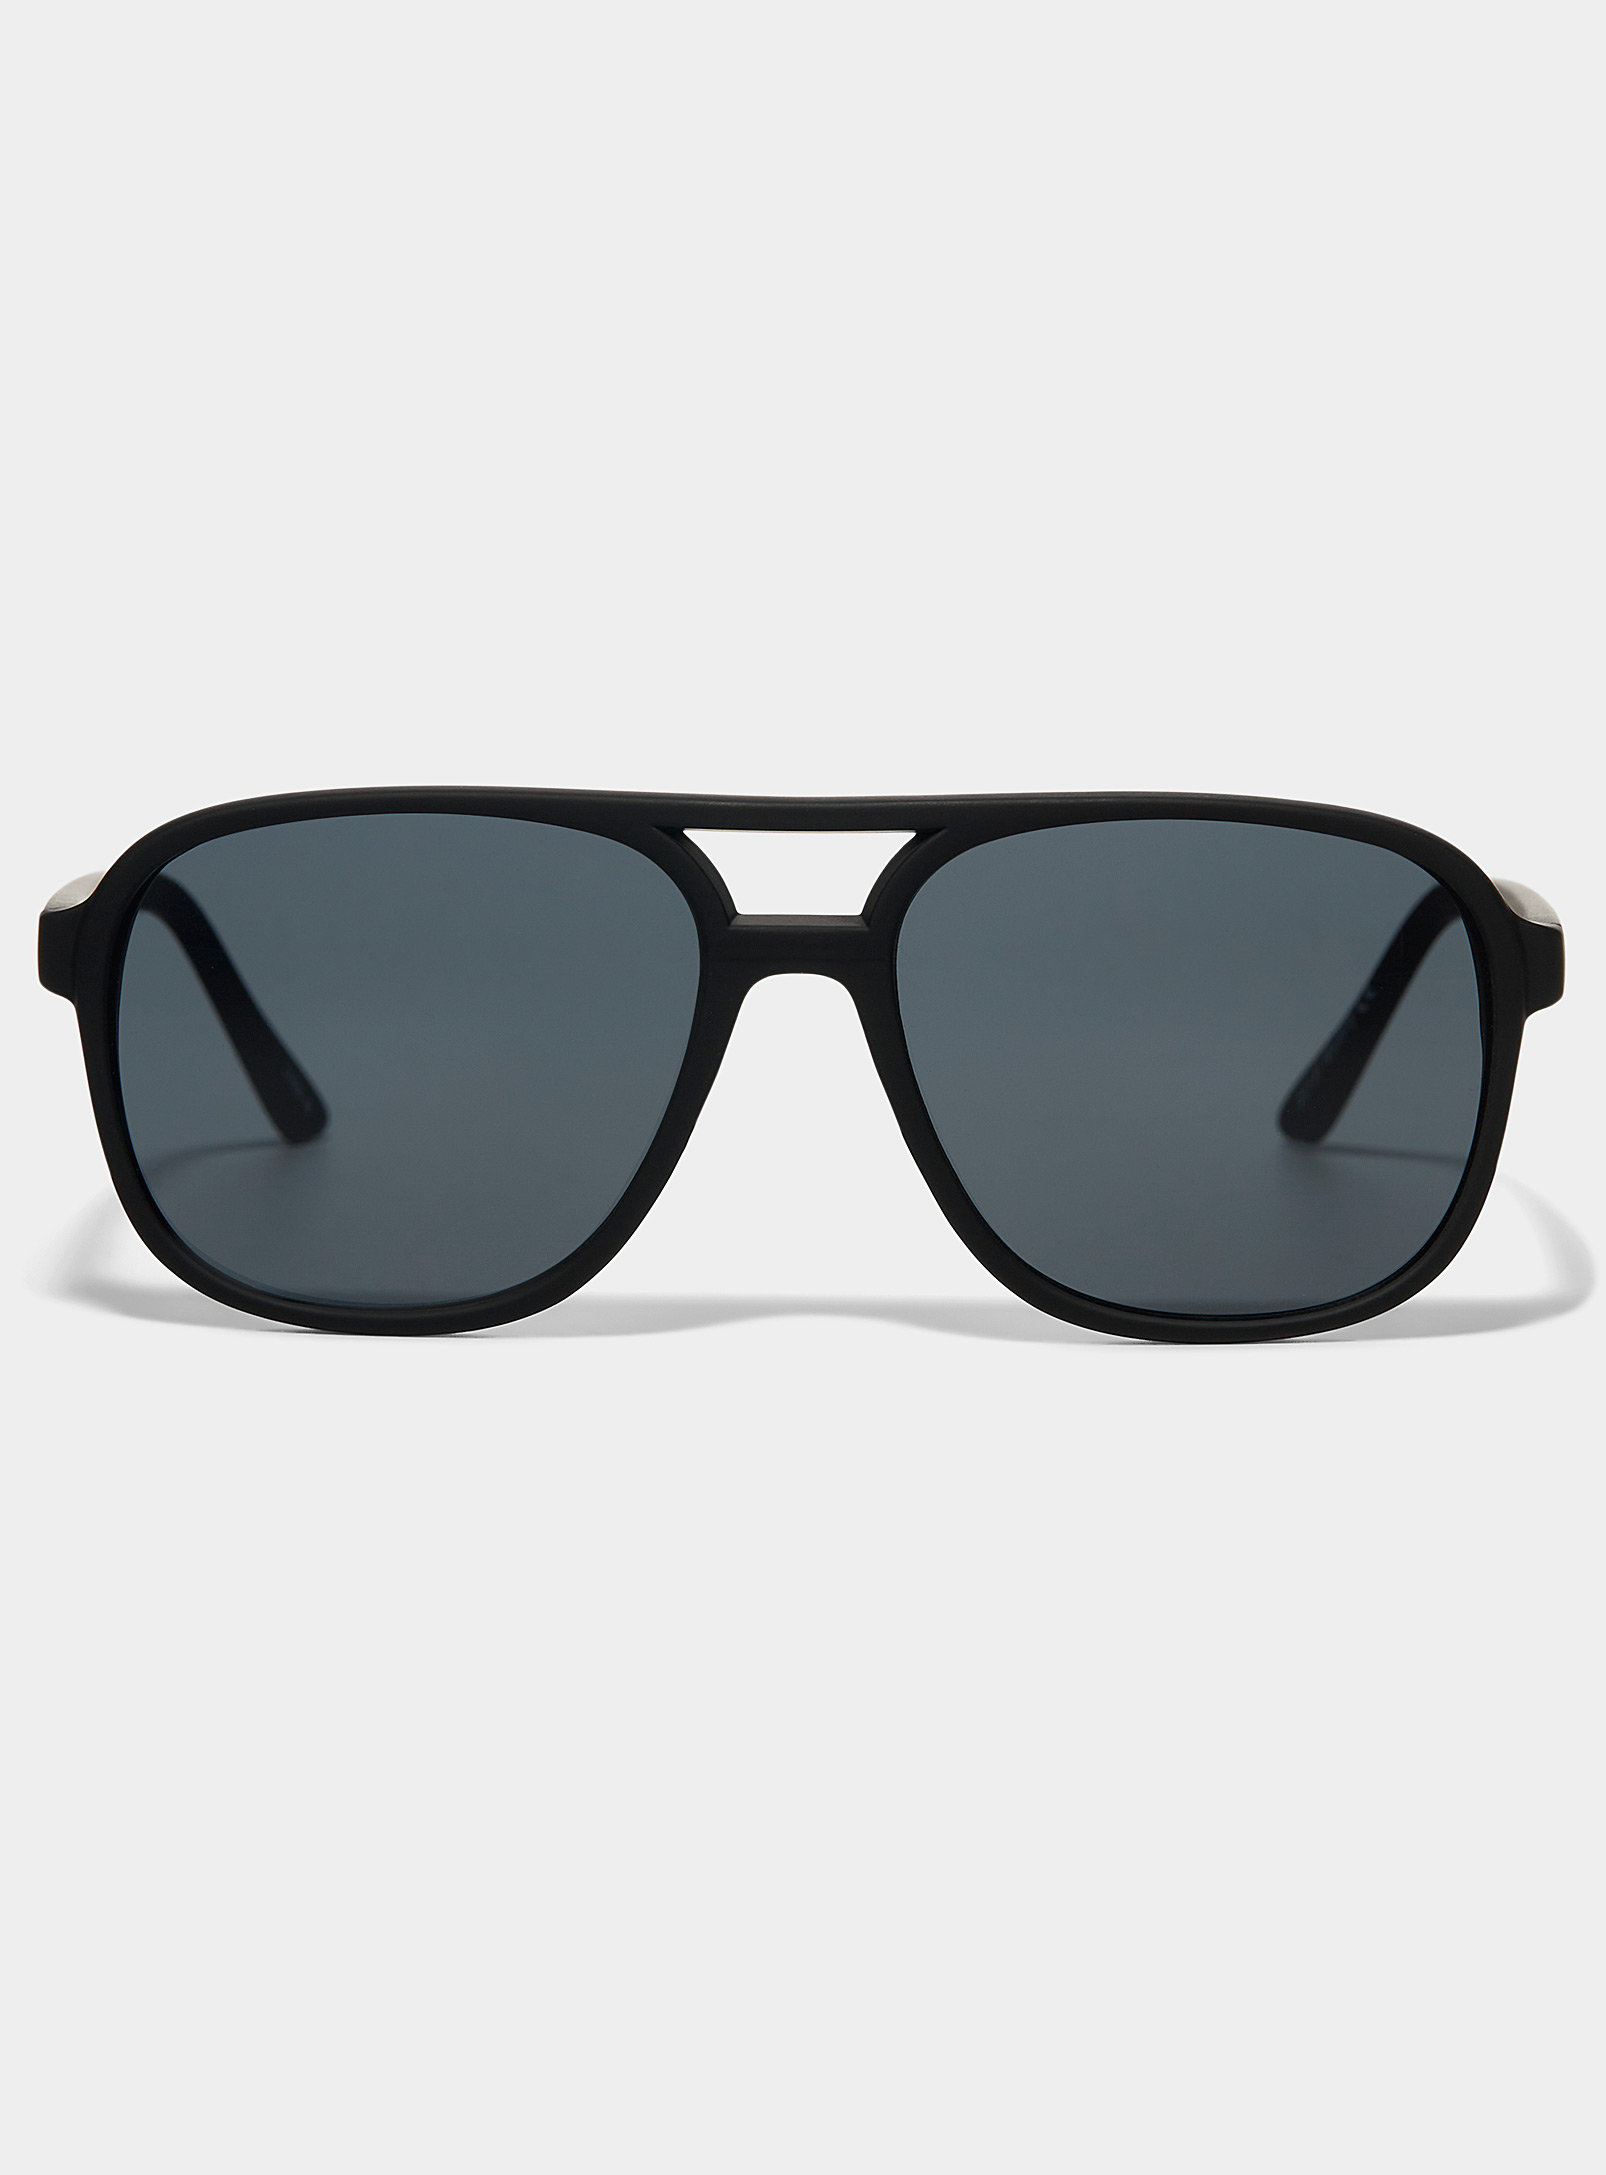 Le 31 Murphy Aviator Sunglasses In Black